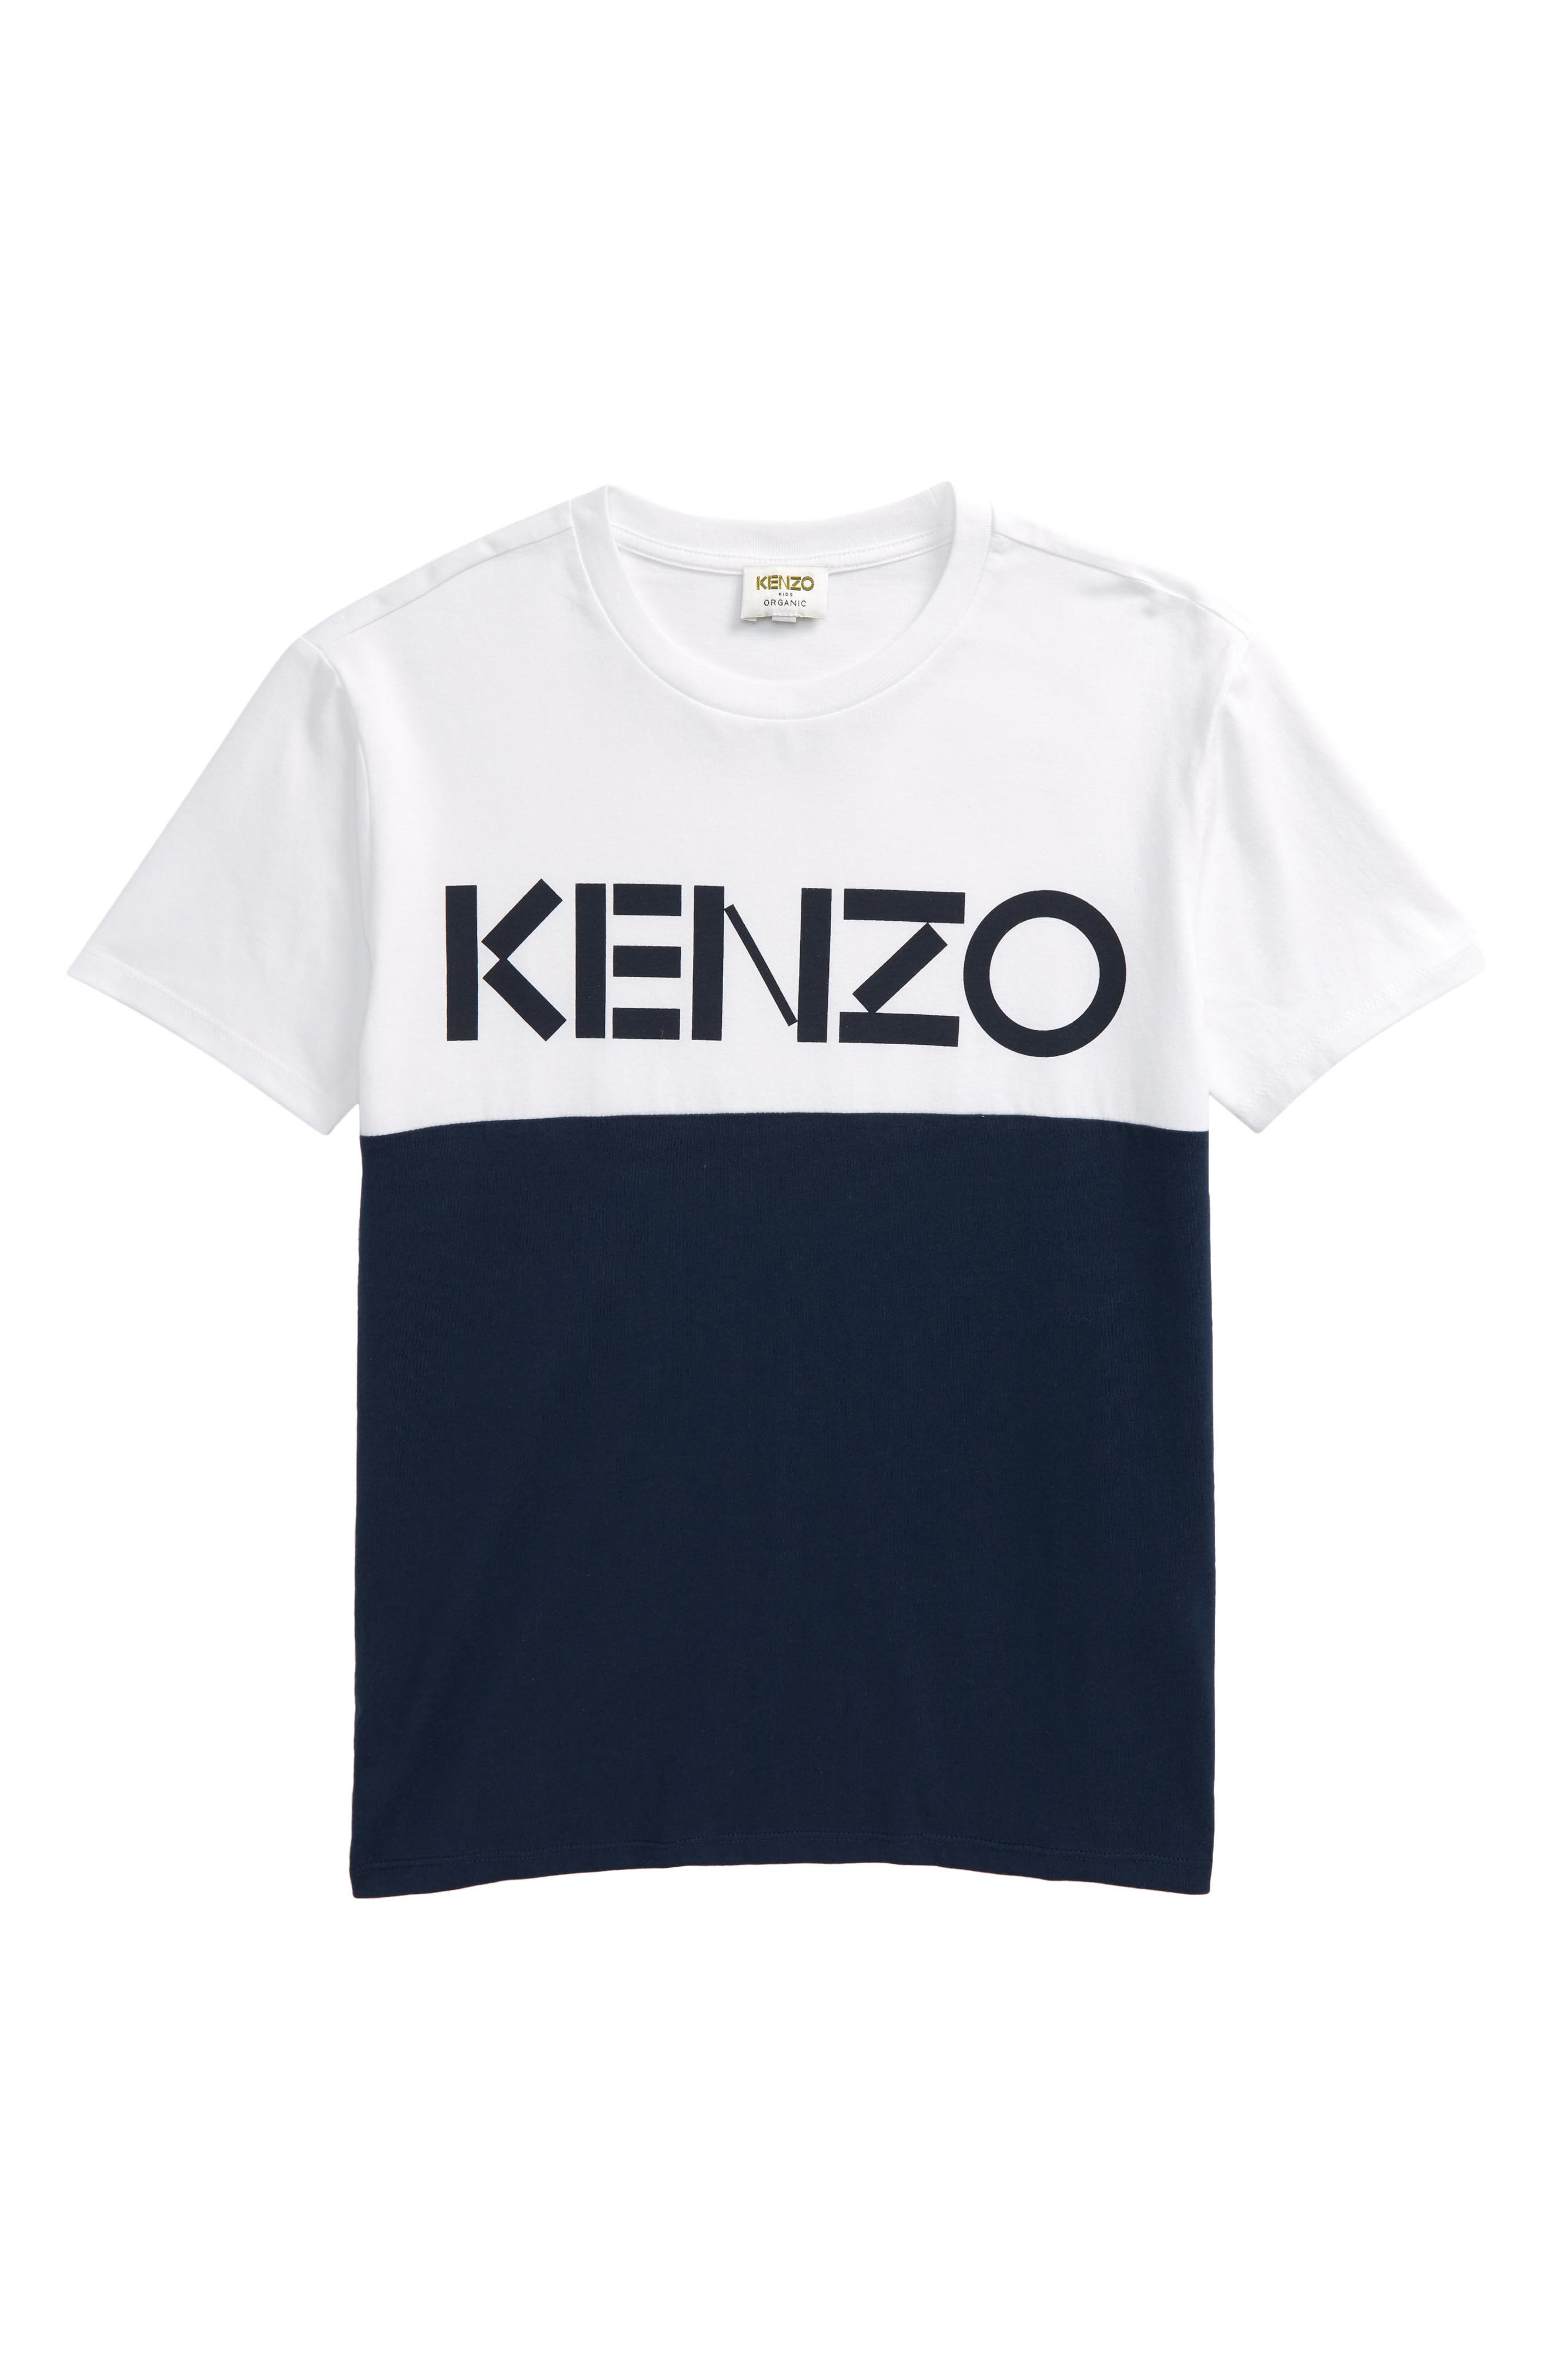 kenzo new designer